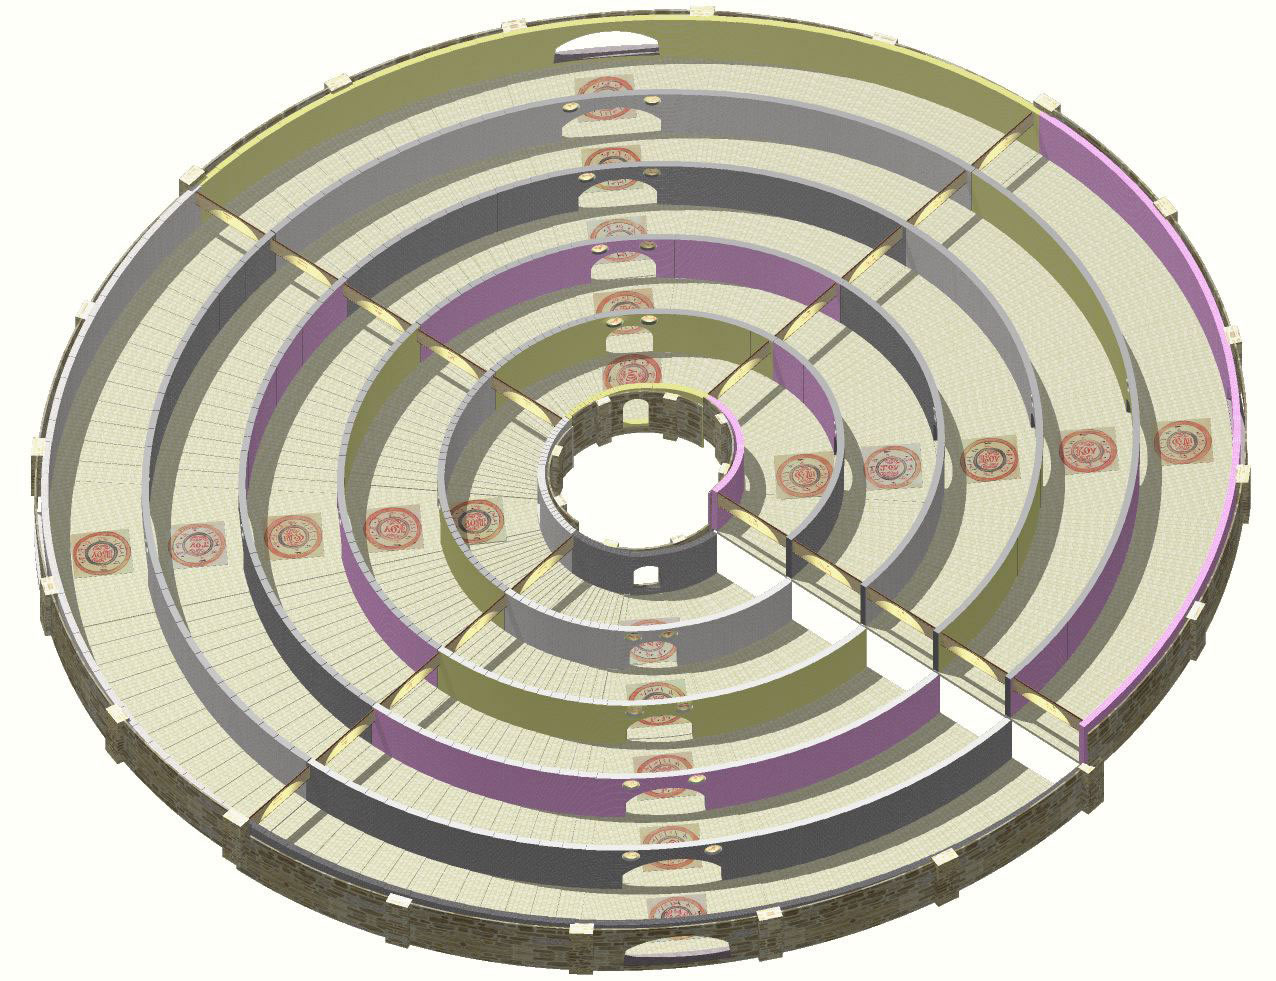 Labyrinth on the fundament of the Koukouzelian Wheel